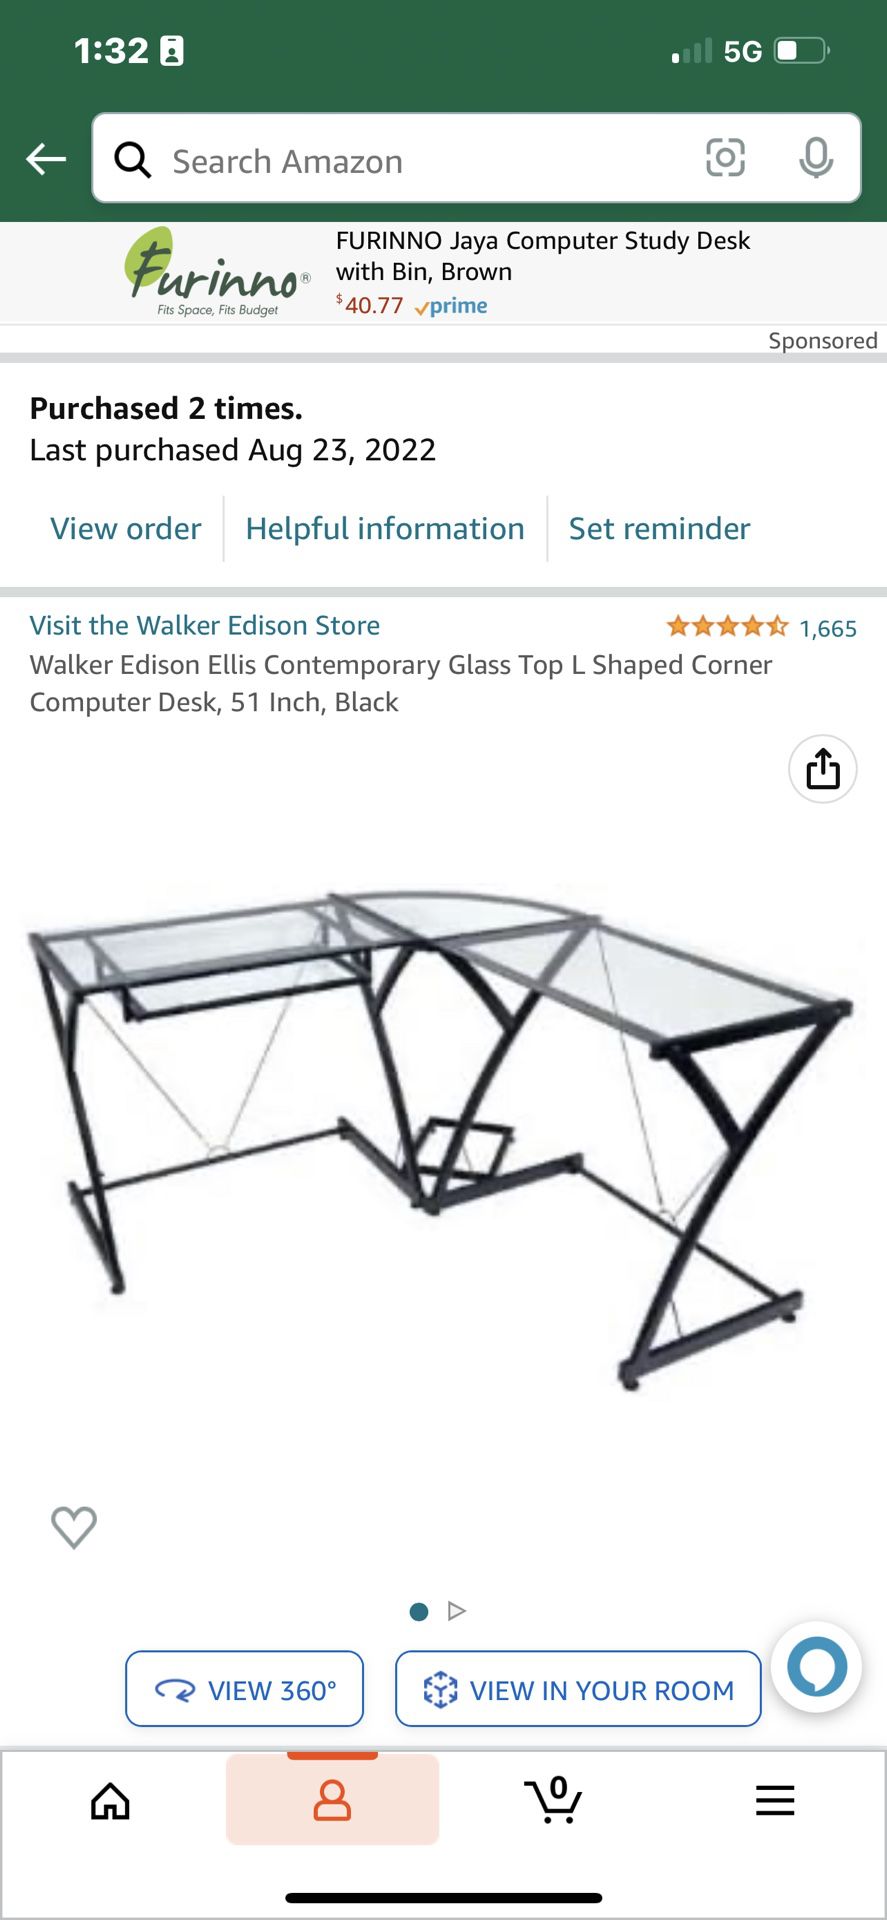 Walker Edison Ellis Contemporary Glass Top L Shaped Corner Computer Desk, 51 Inch, Black